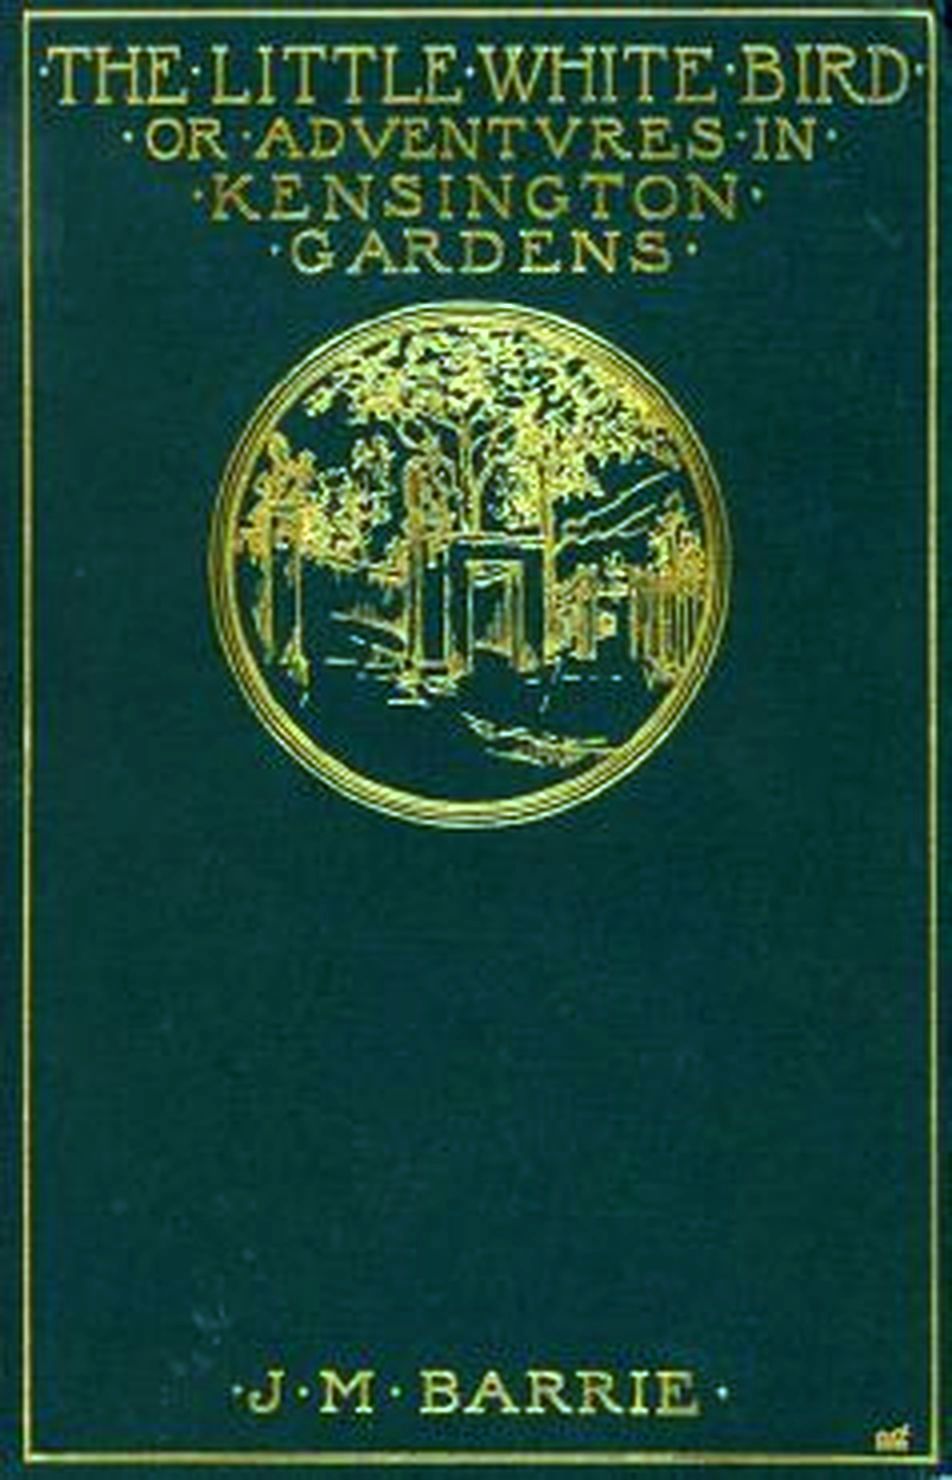 Cover of J. M. Barrie's The Little White Bird, or Adventures in Kensington Gardens